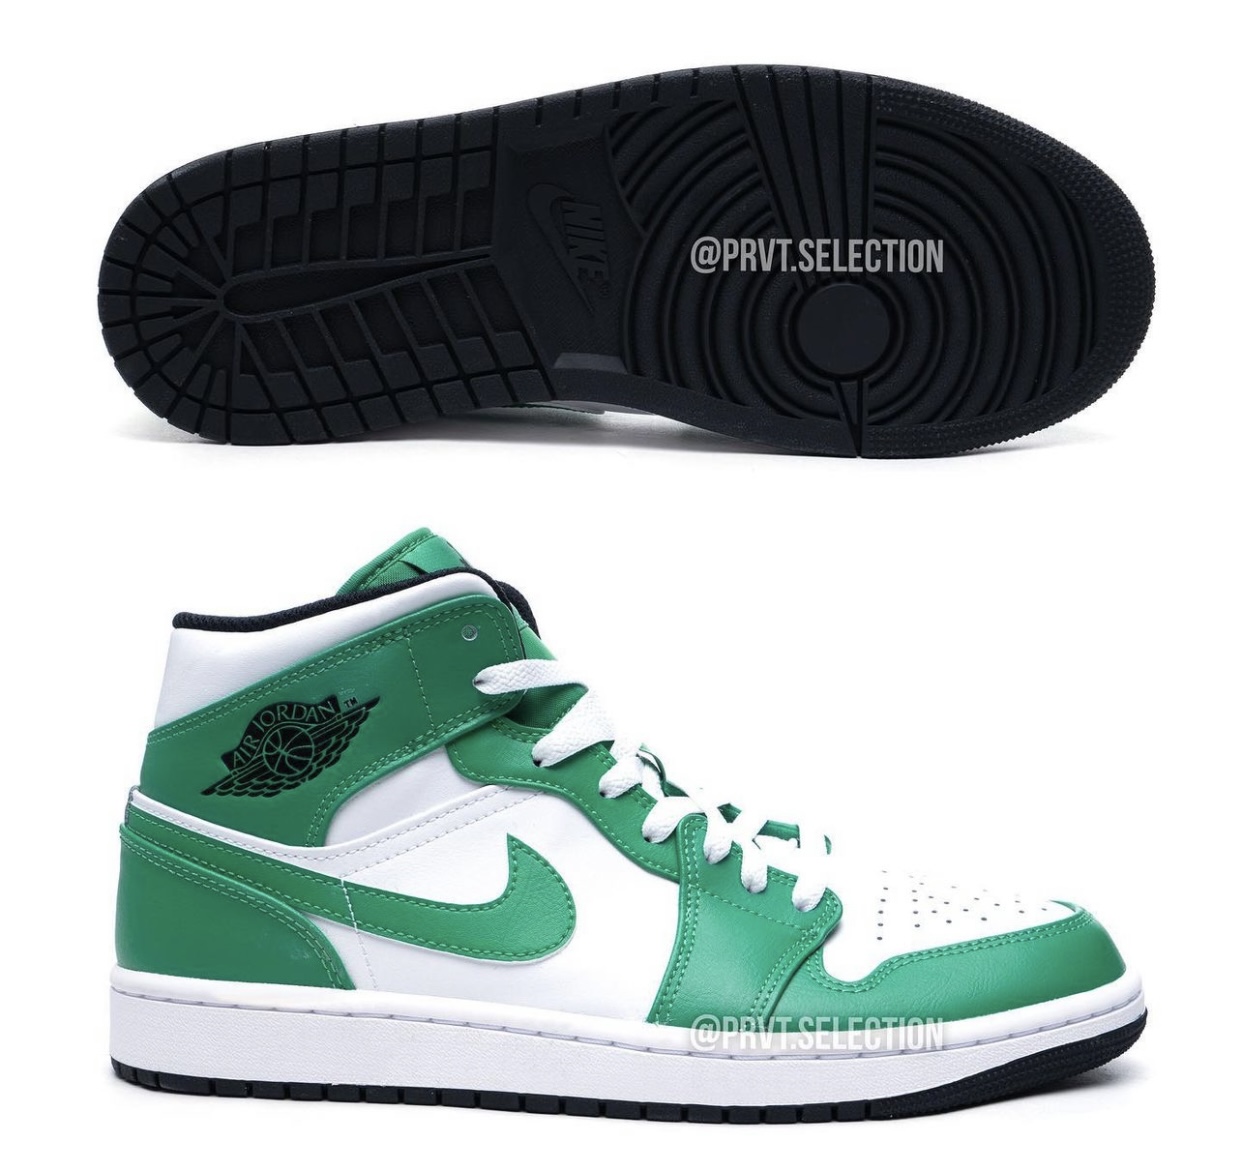 Nike UNION LA × NIKE AIR JORDAN High Retro 85 Neutral Grau-us12 uk11 eu46 DS BRANDNEU Lucky Green DQ8426-301 Release Date Price